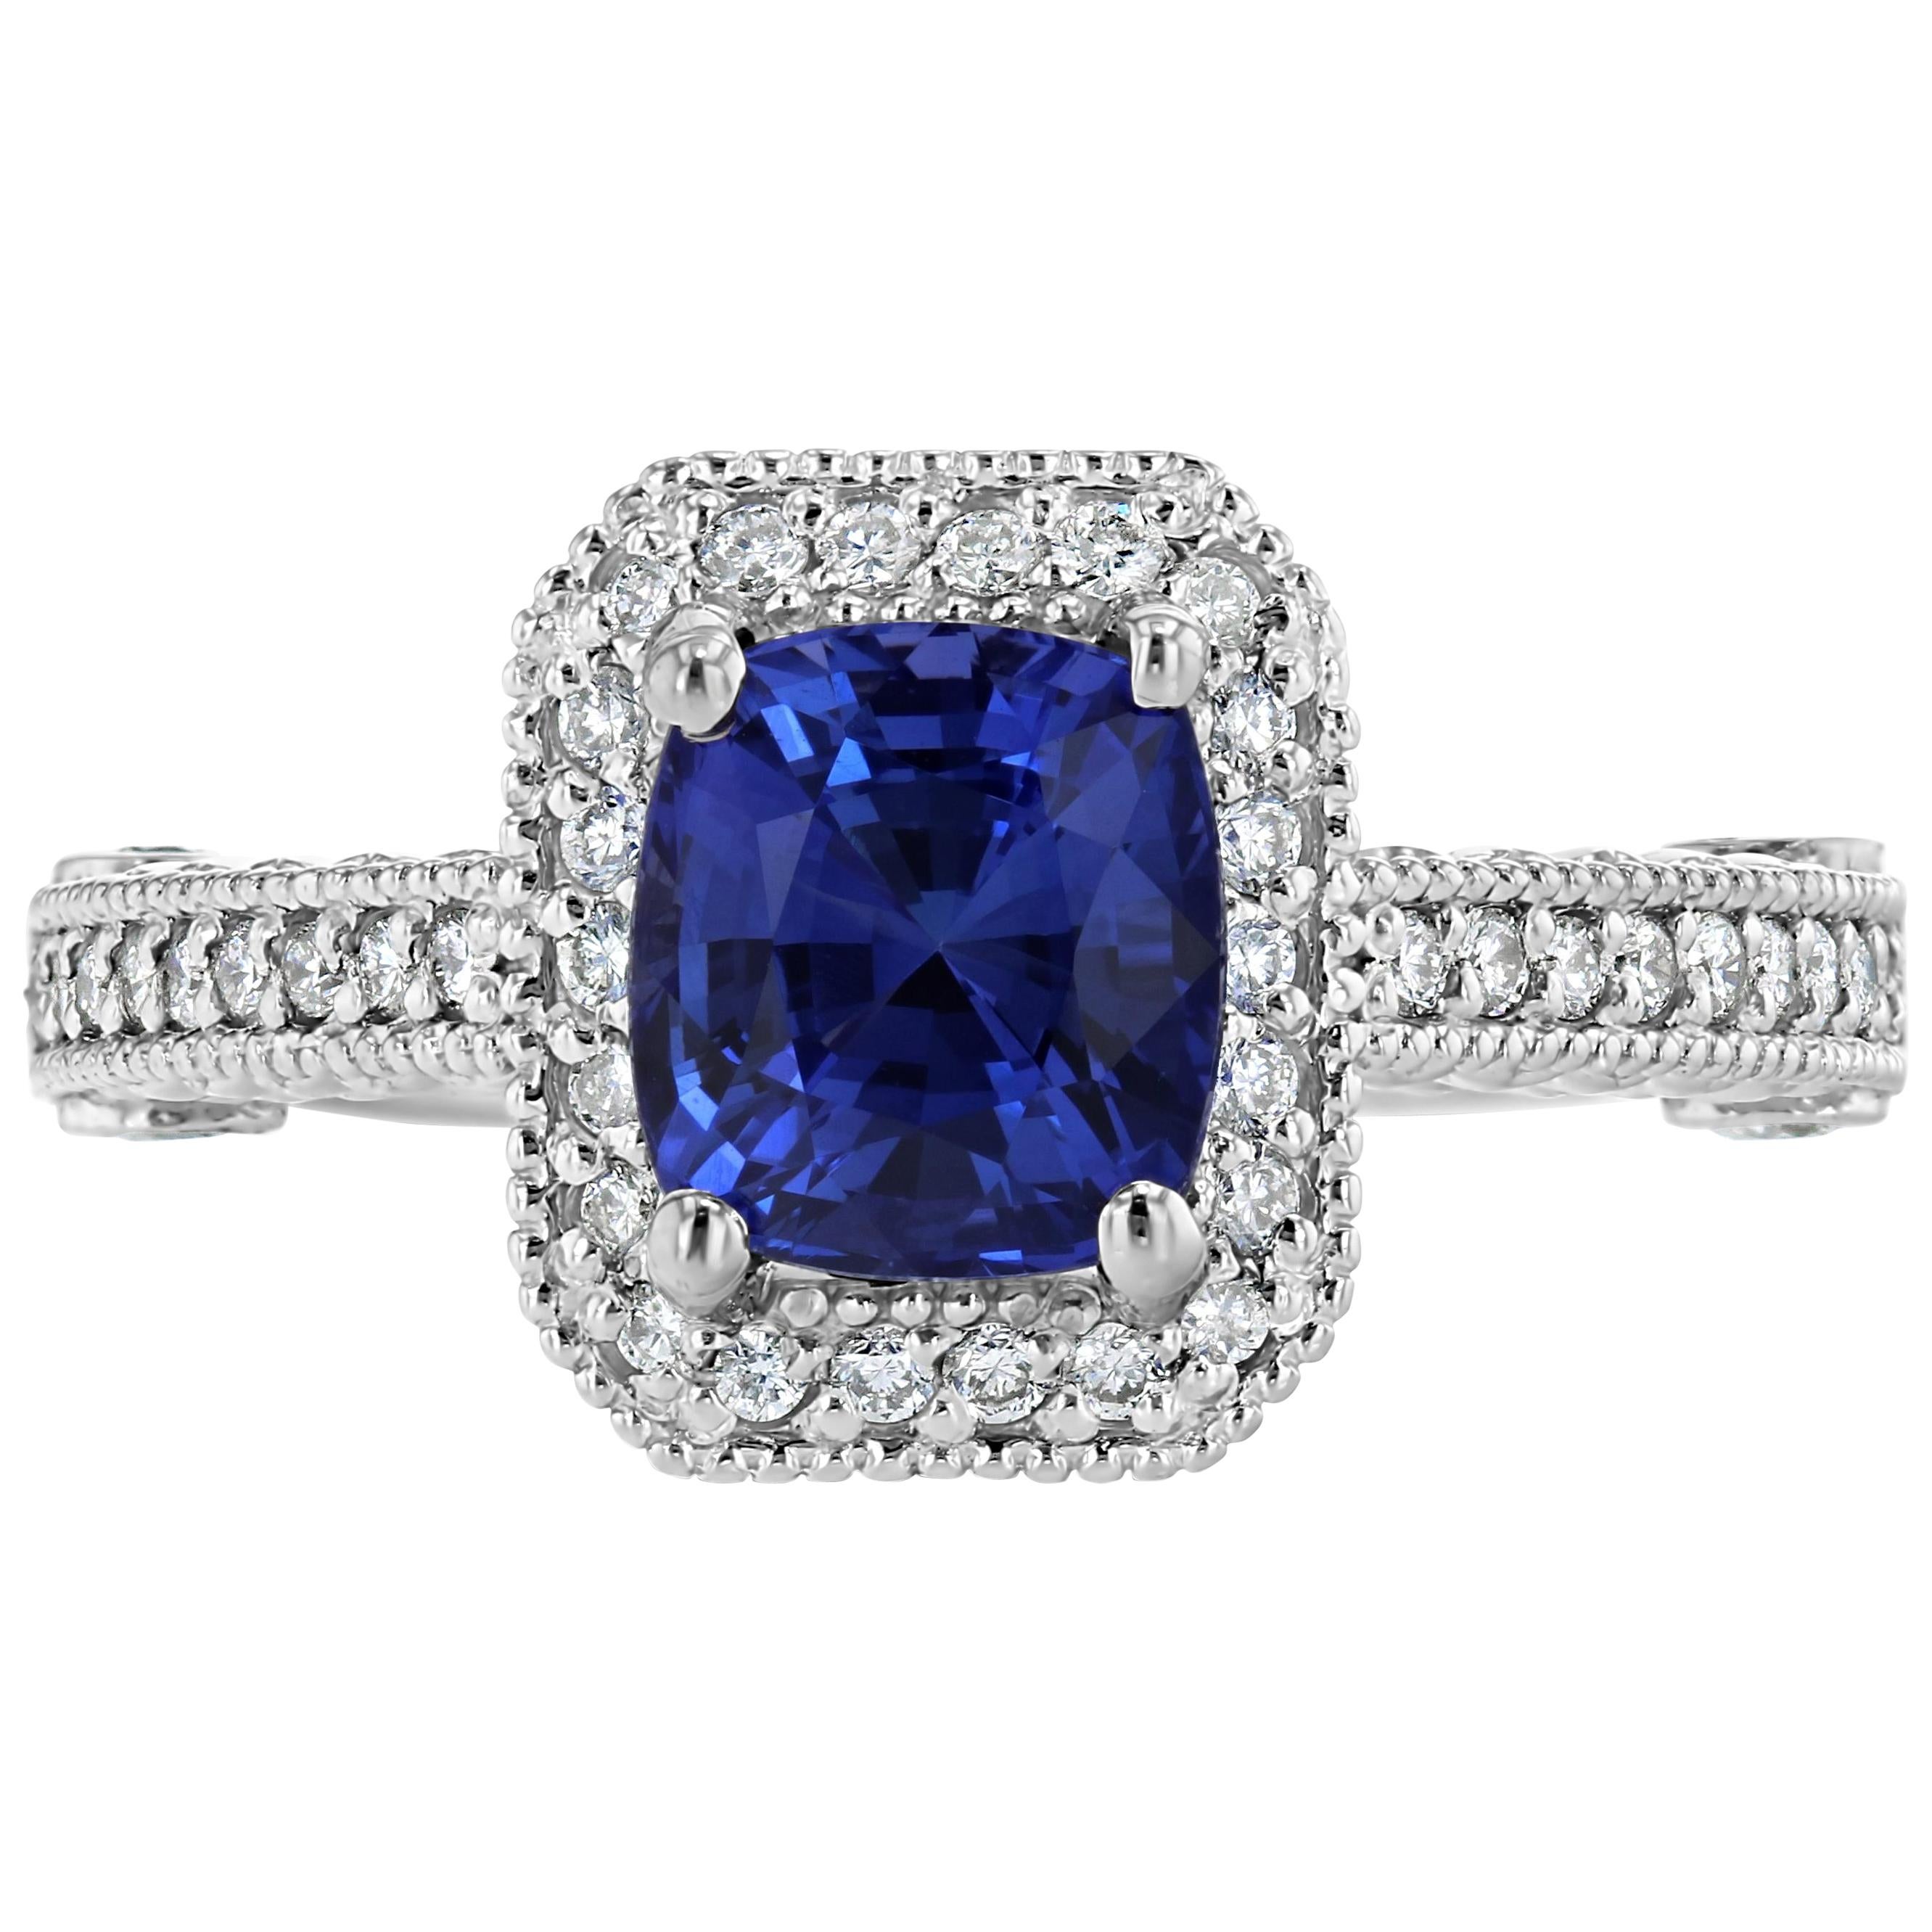 3.18 Carat Blue Sapphire Diamond Engagement Ring 14 Karat White Gold